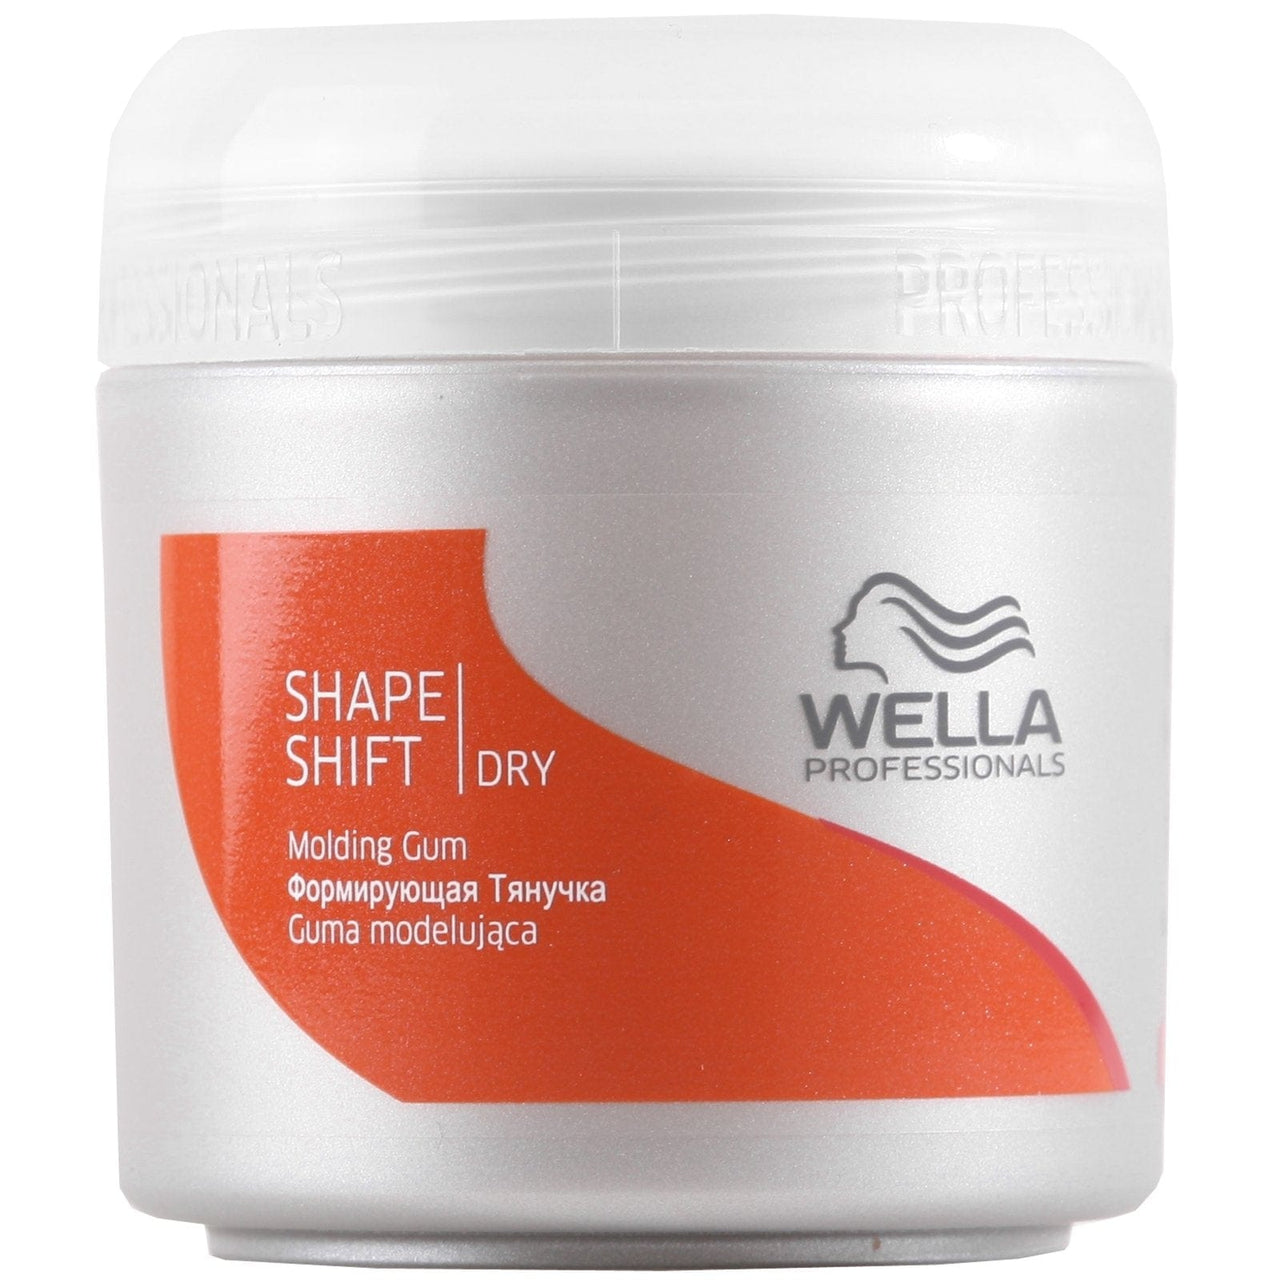 WELLA_Shape Shift Molding Gum 153g / 5.39oz_Cosmetic World